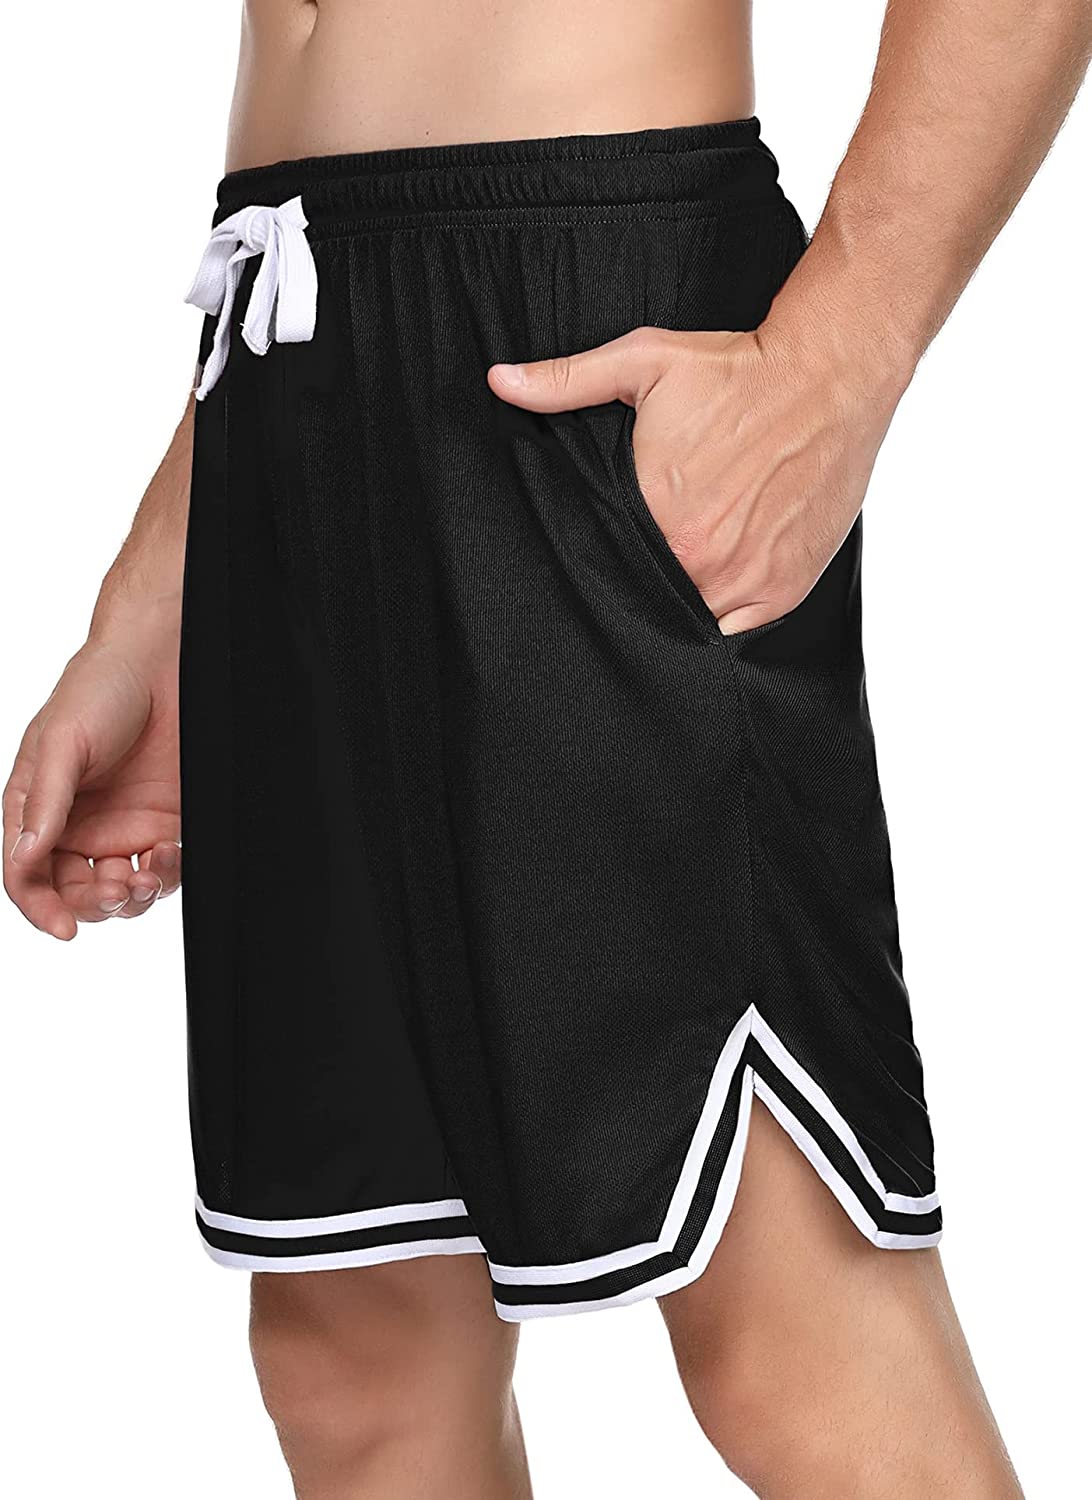 Wayleb Men's Sports Shorts Cotton Summer Running Training Workout Shorts  with Zipper Pockets Elastic Waist Jogging Gym Athletic Shorts,Black,S :  : Fashion